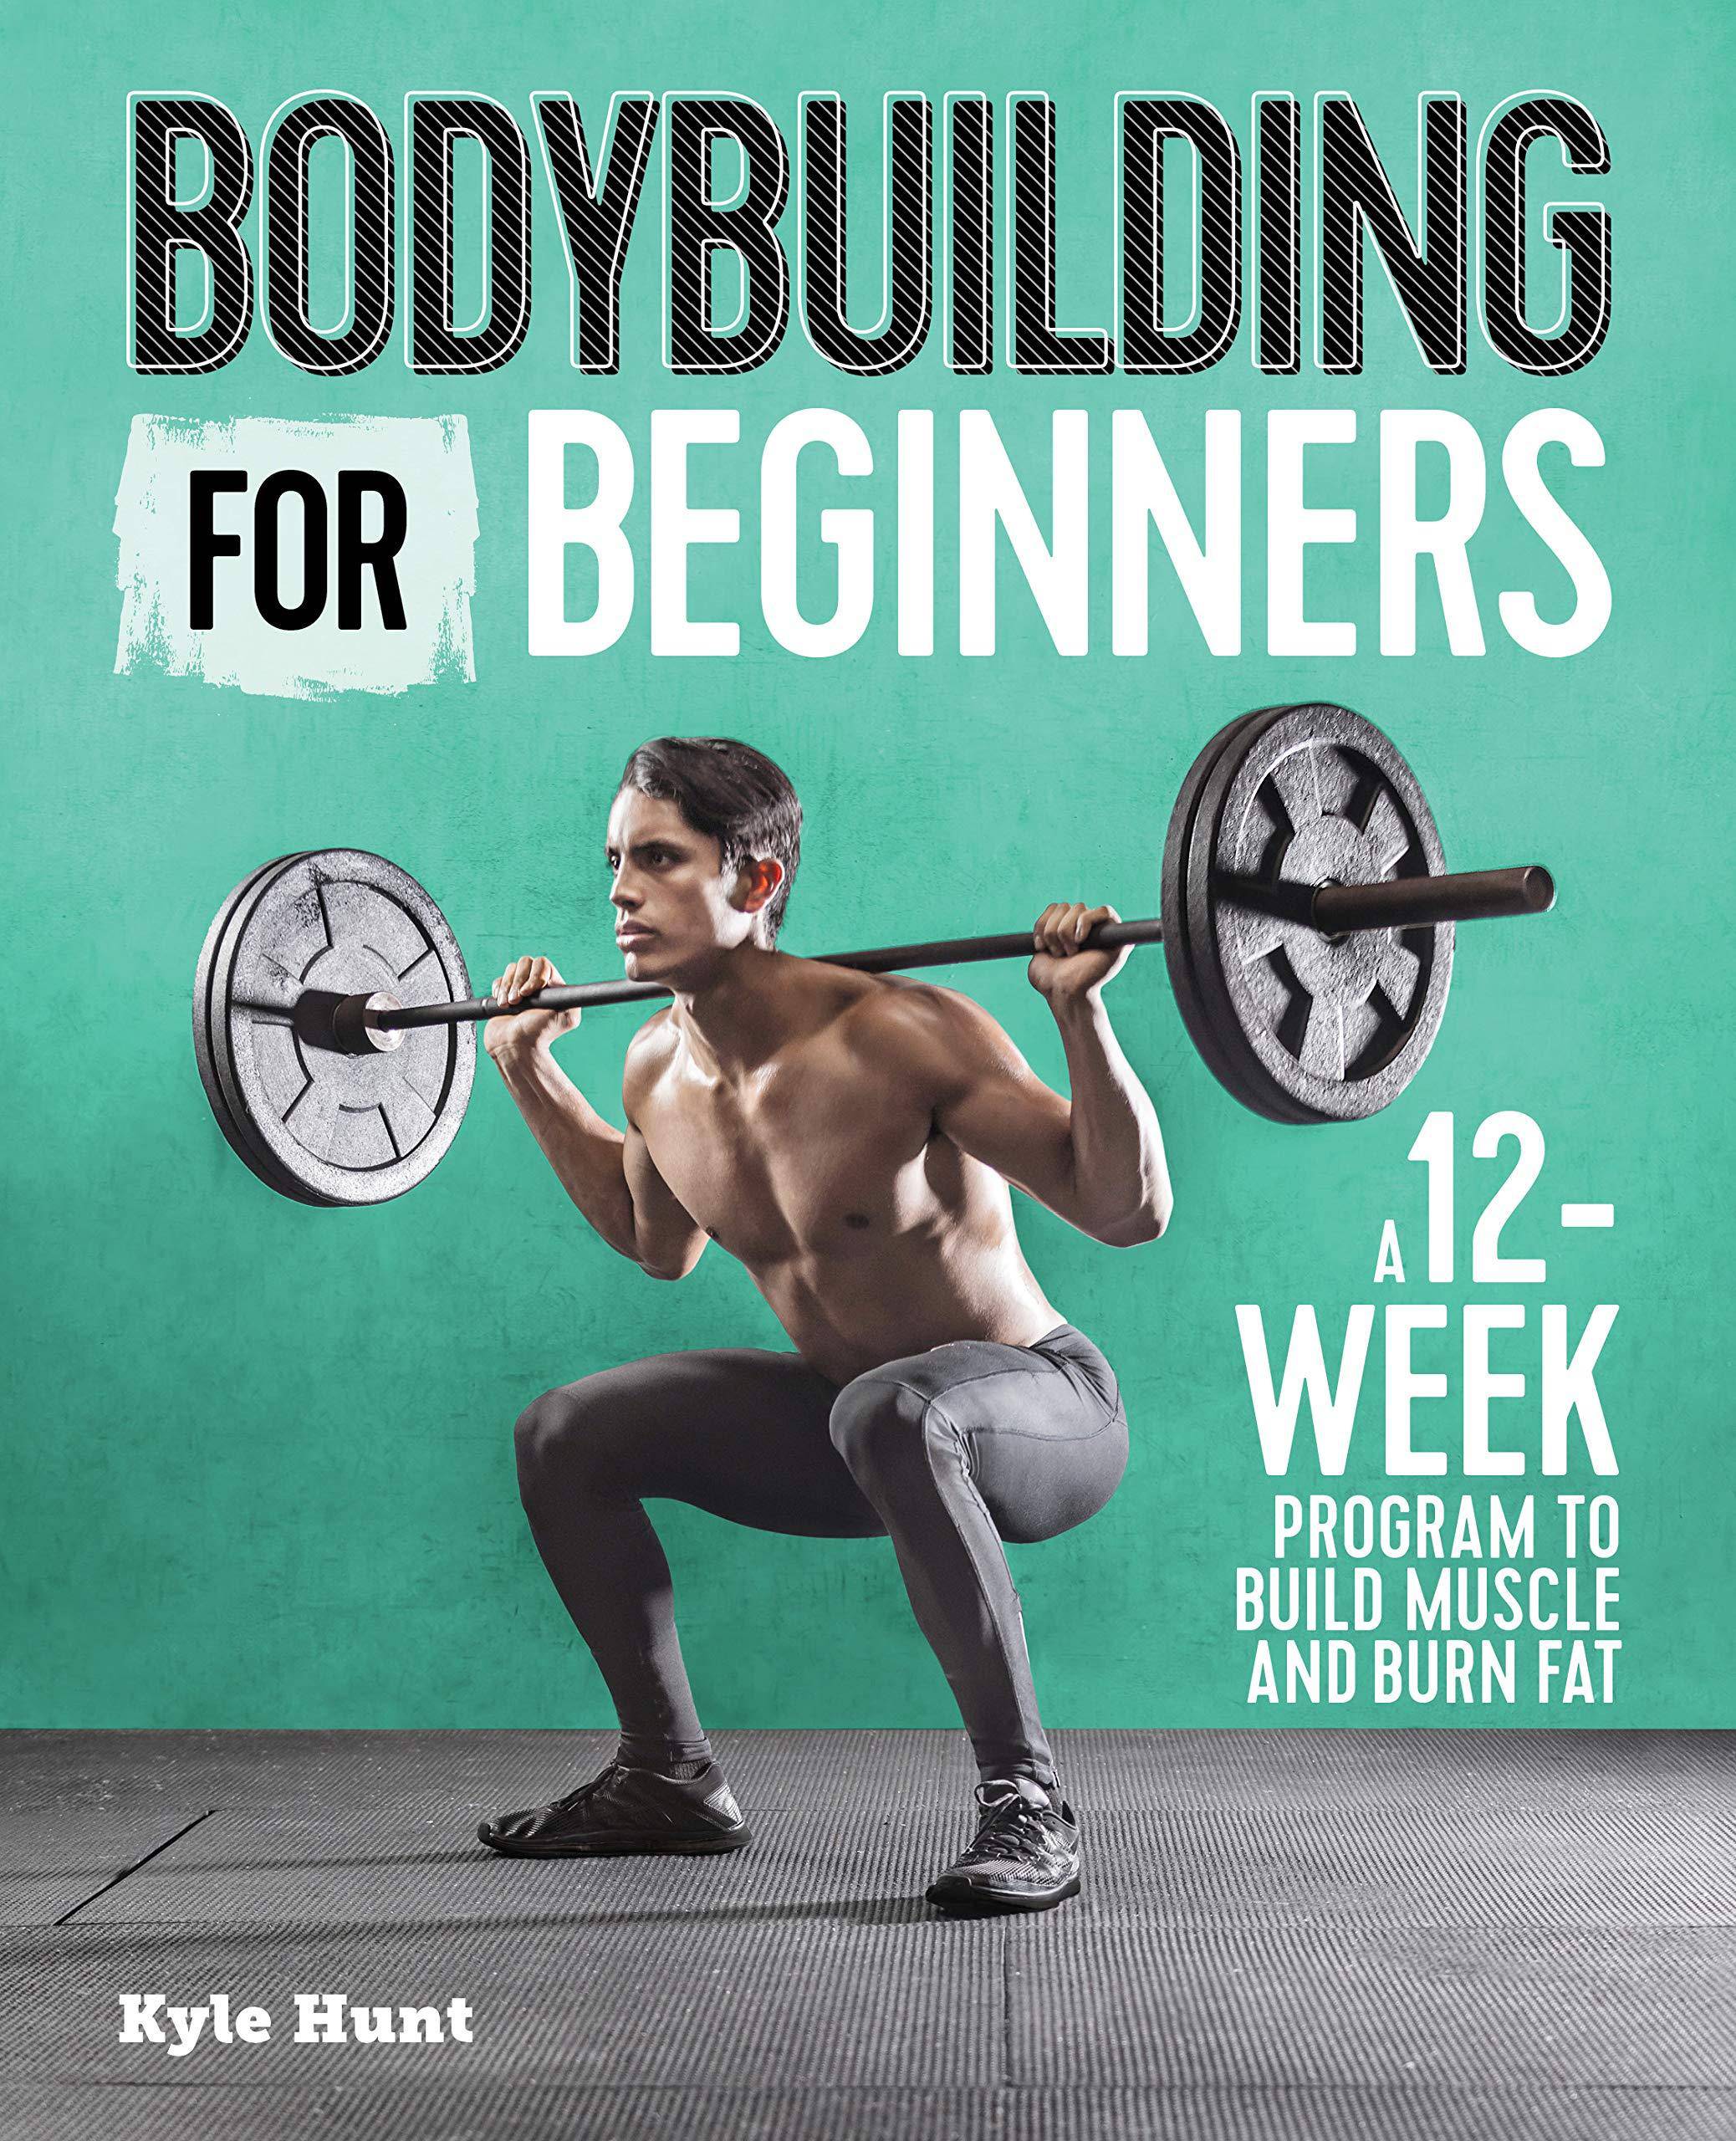 Bodybuilding For Beginners - SureShot Books Publishing LLC